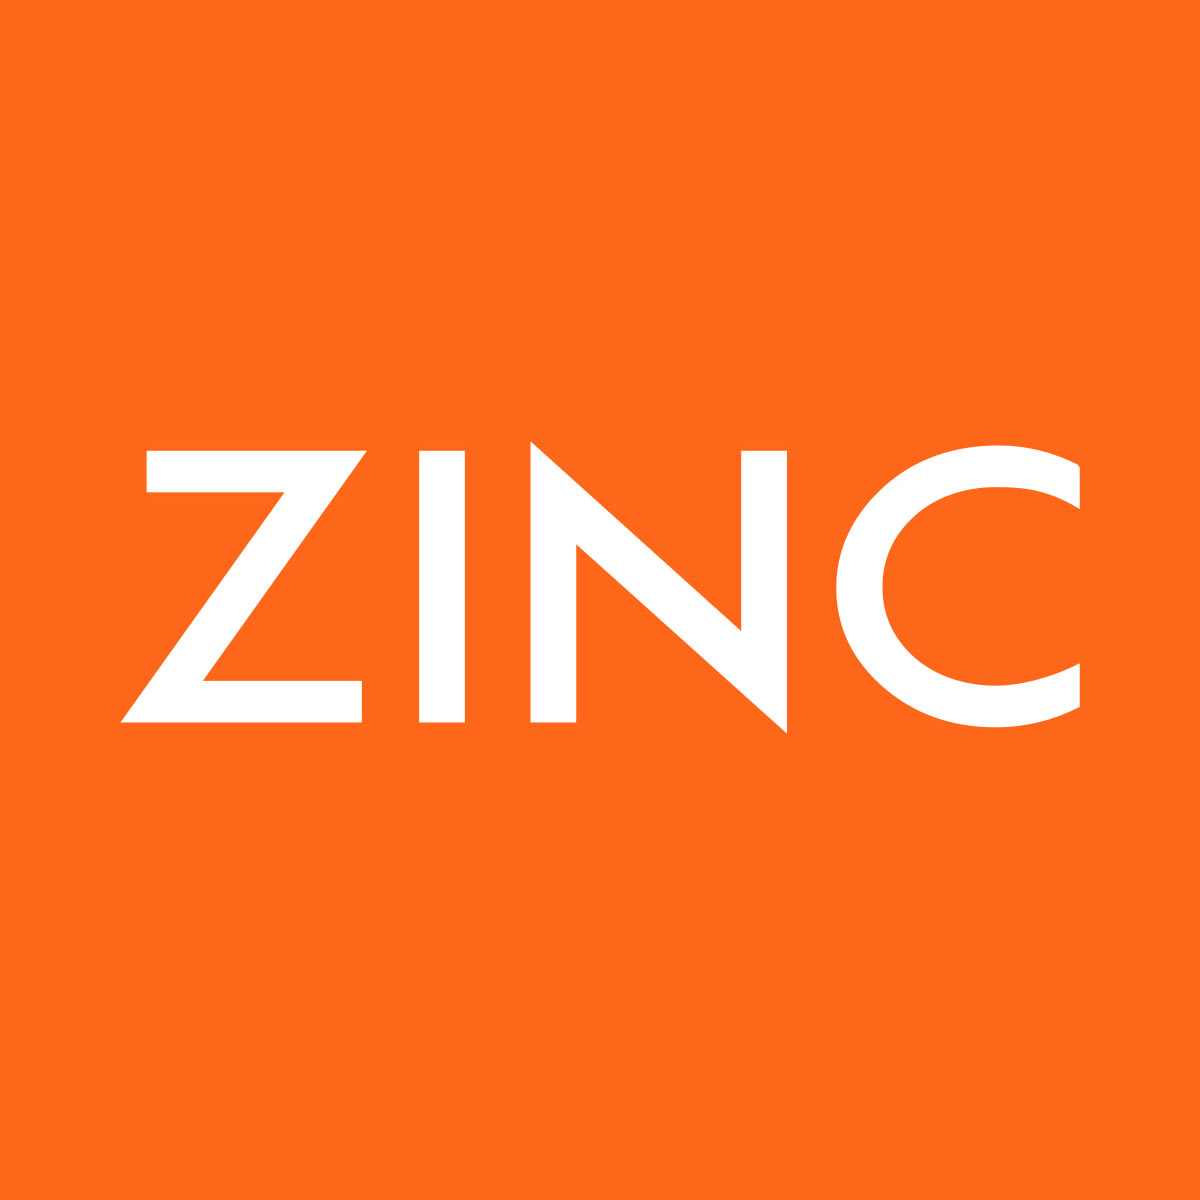 ZINC contemporary company logo